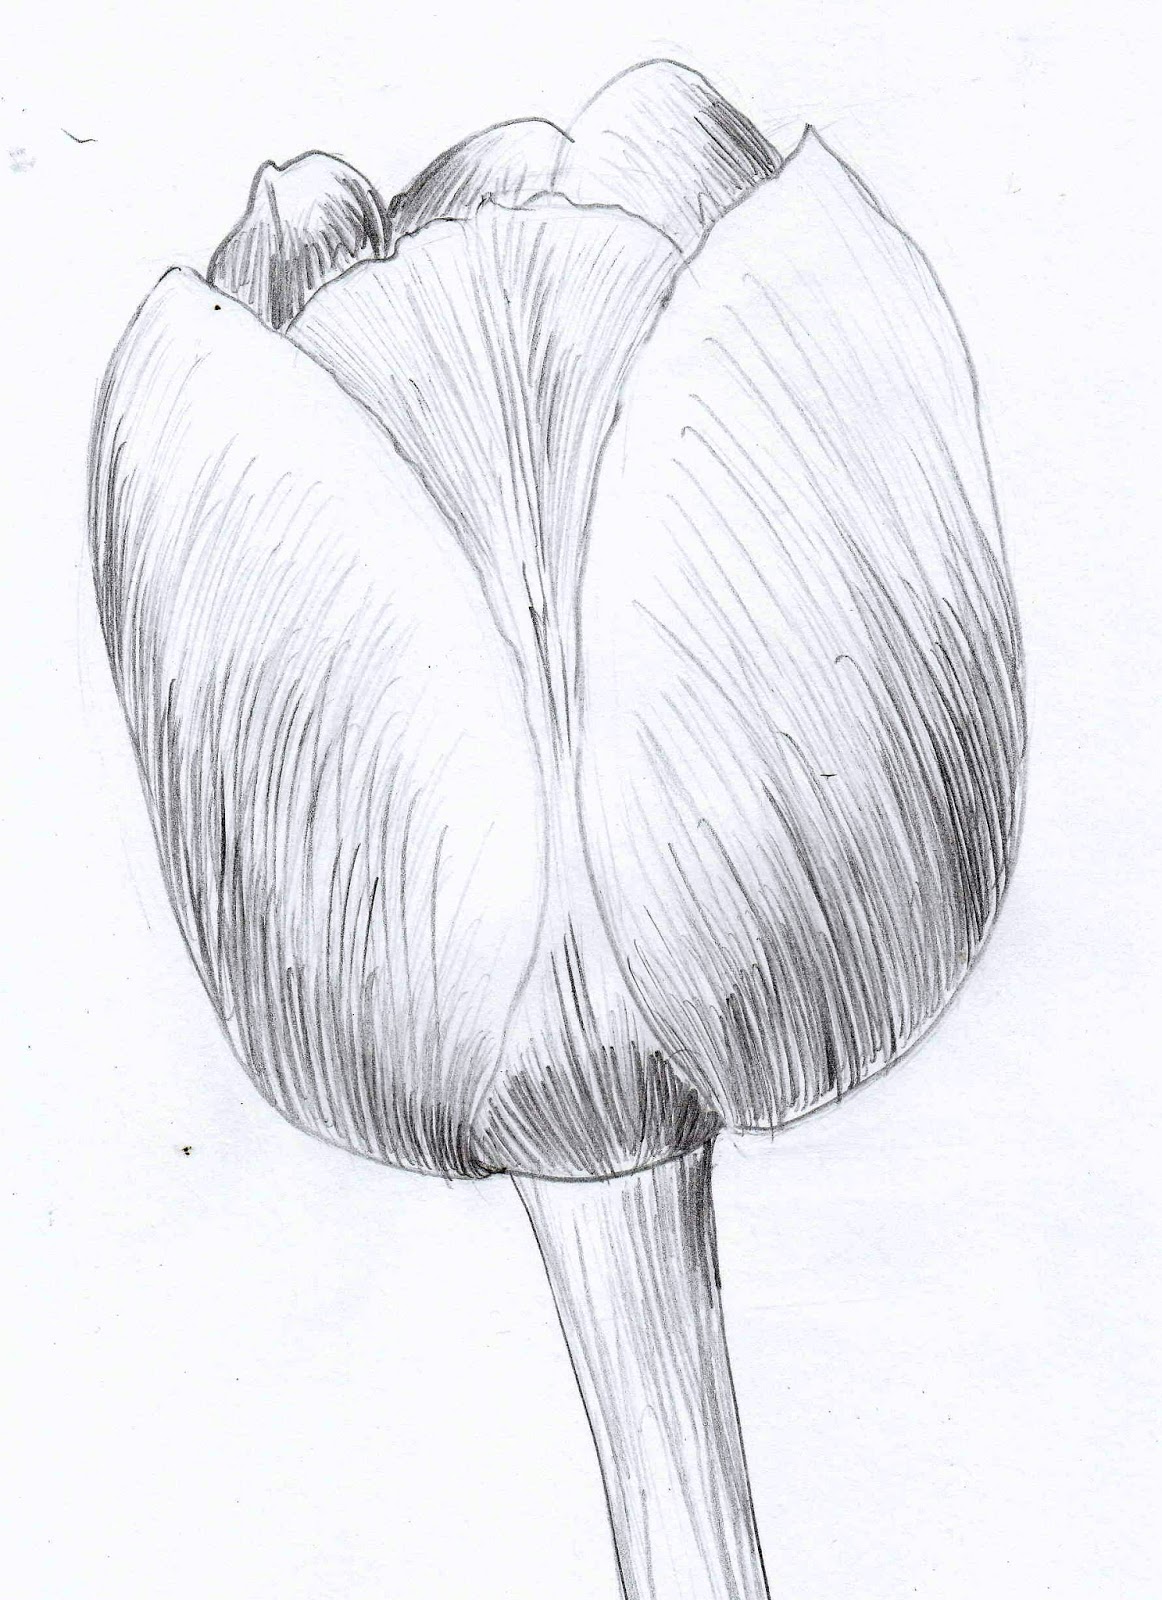 How To Draw A Tulip Step By Step Sketchbooknation Com - vrogue.co